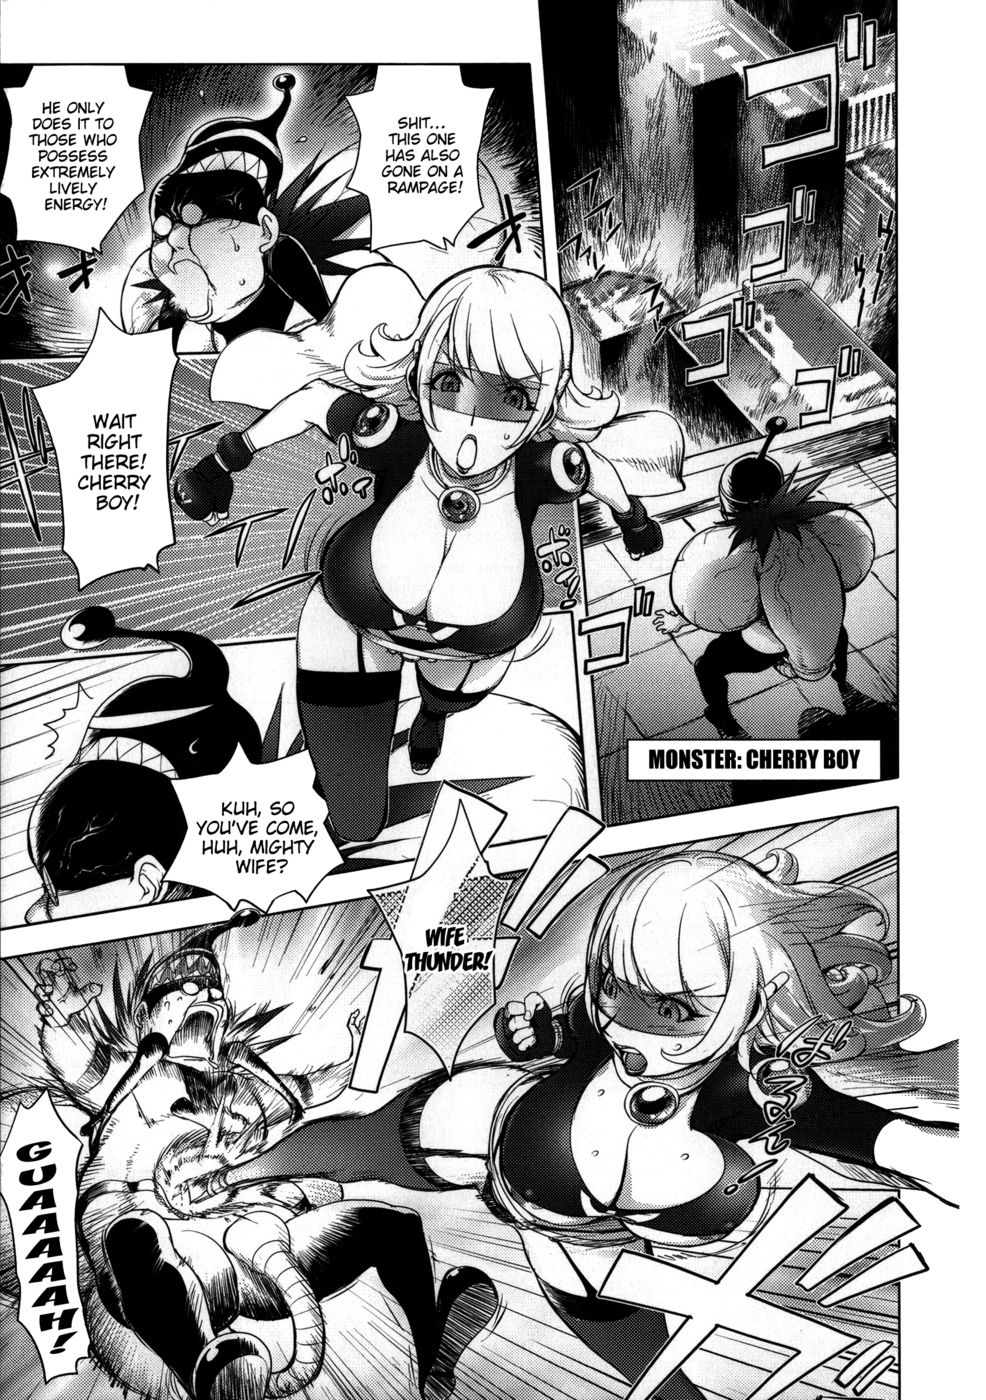 Hentai Manga Comic-Beloved Warrior Wife-Chapter 1 - Mighty wife 1-4